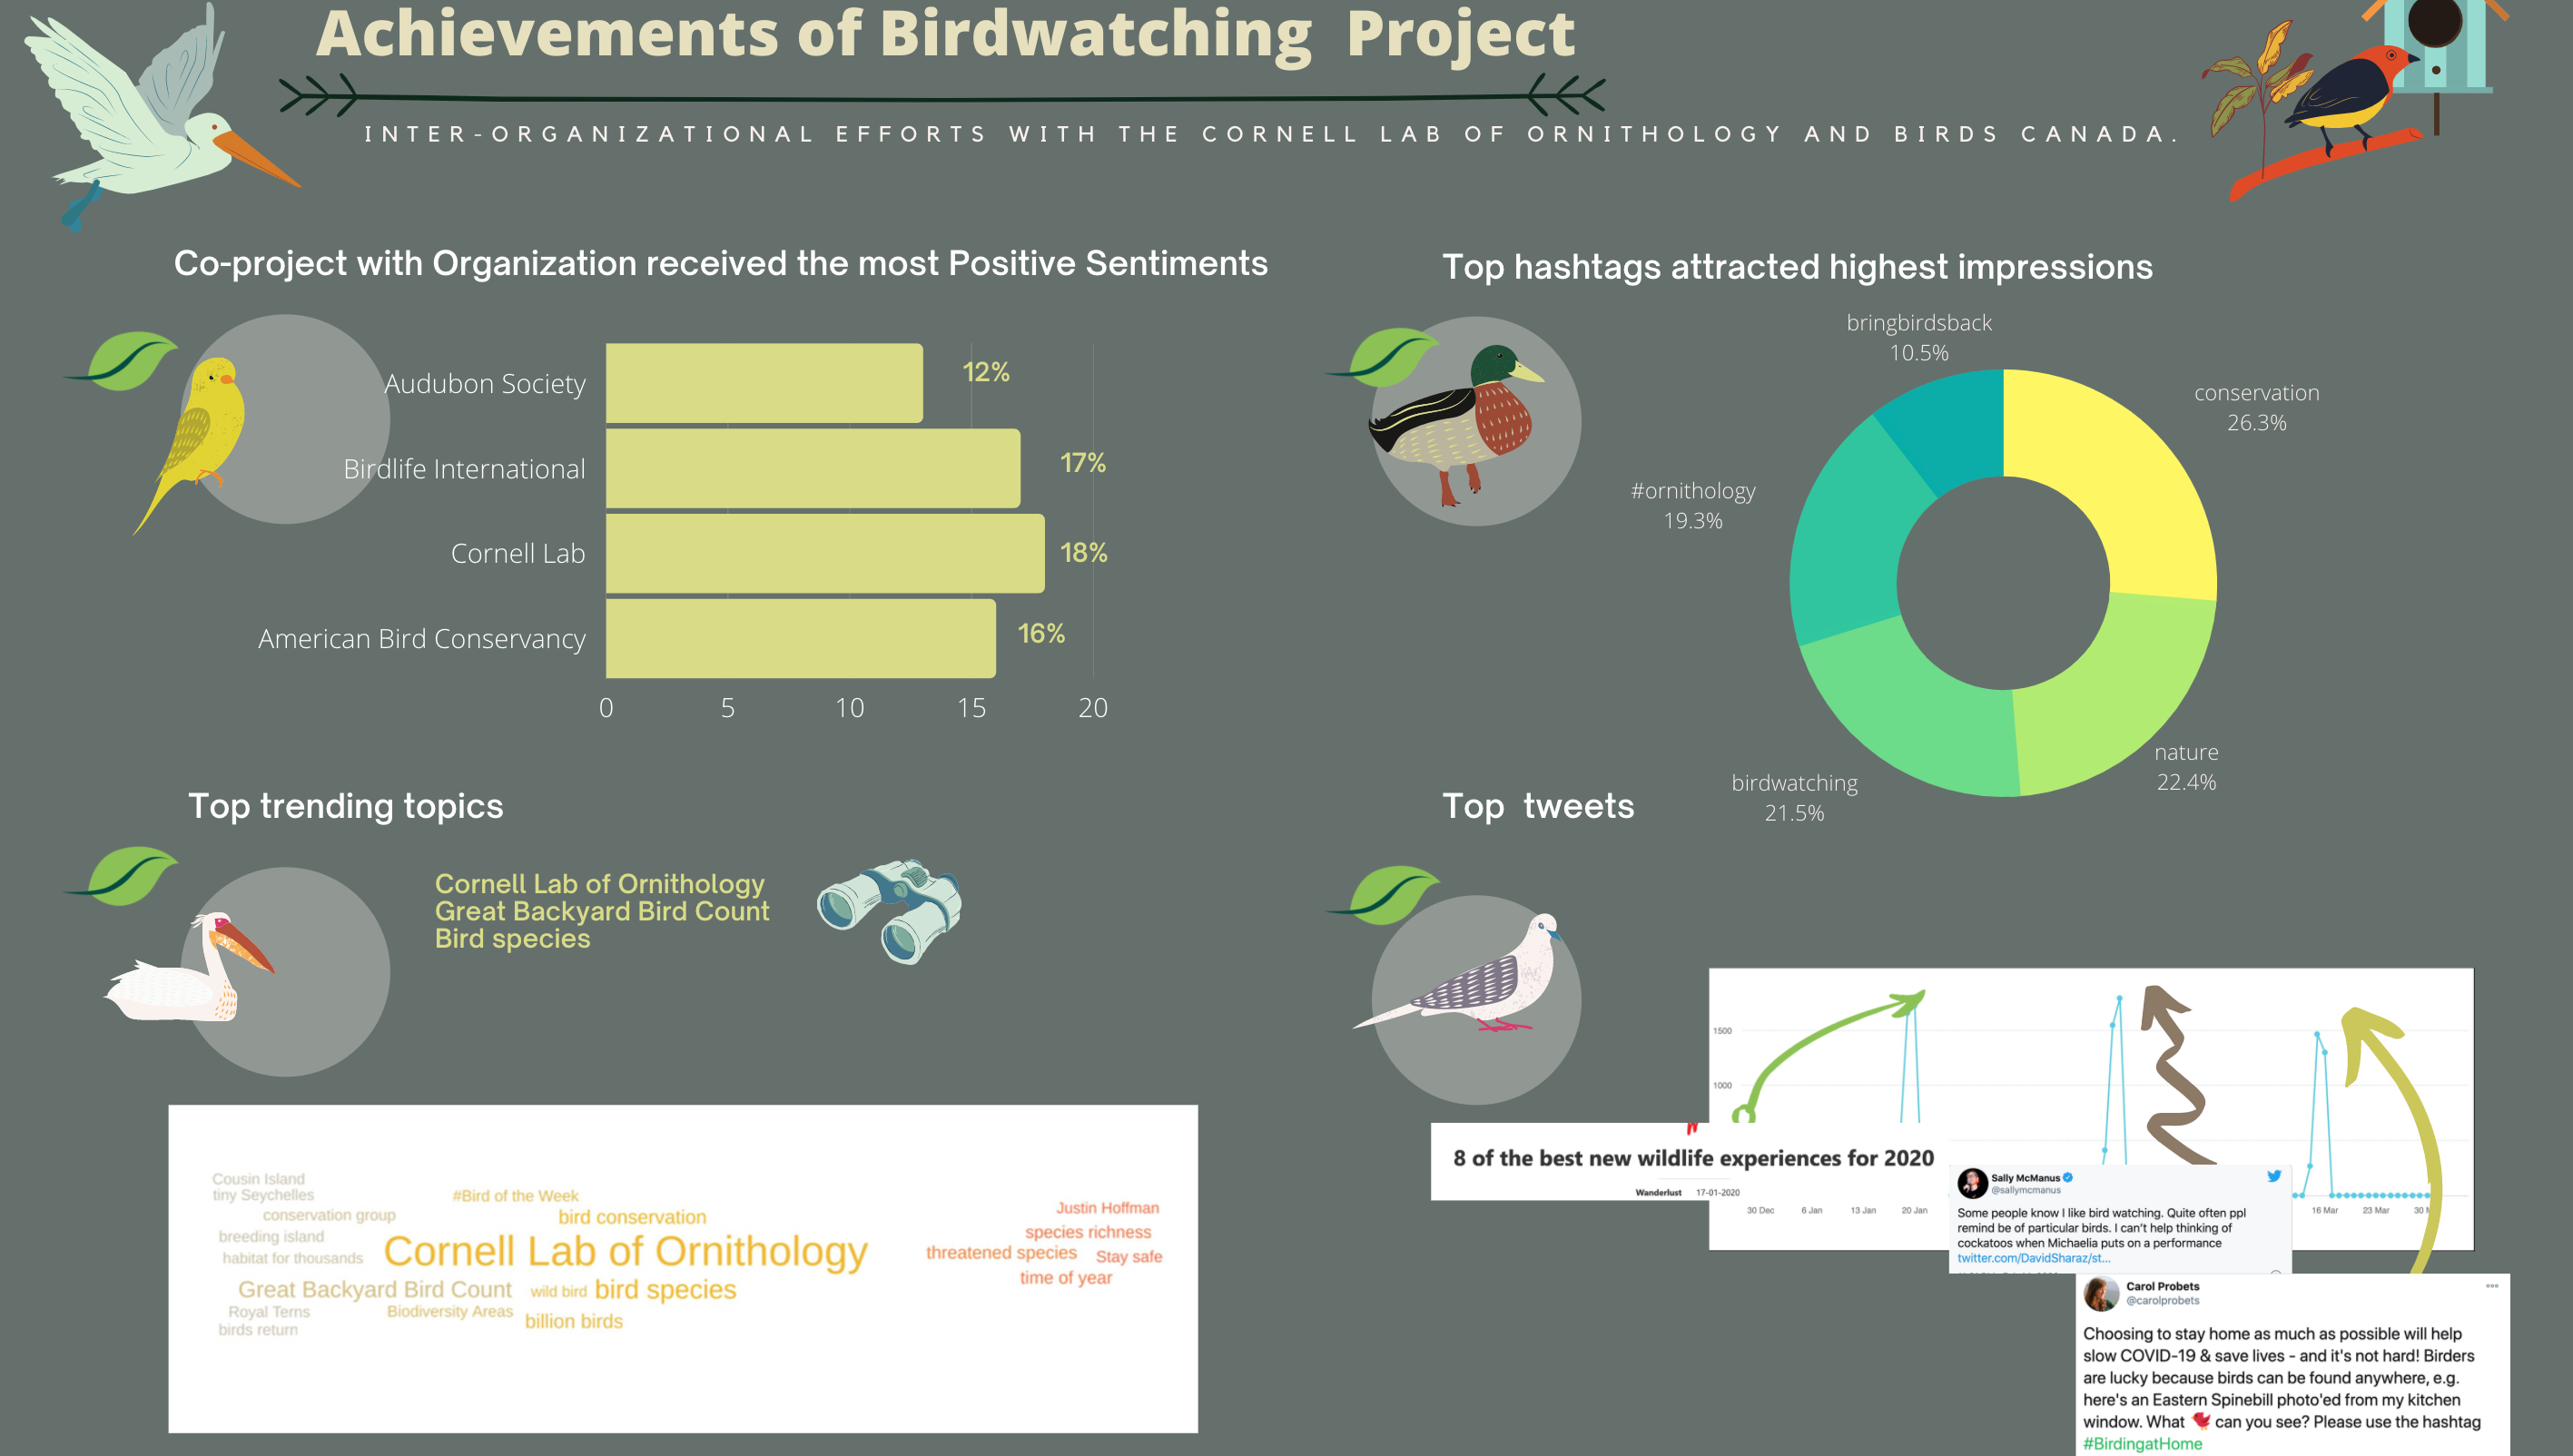 Great Backyard Bird Count Successfully Driven by National Audubon Society